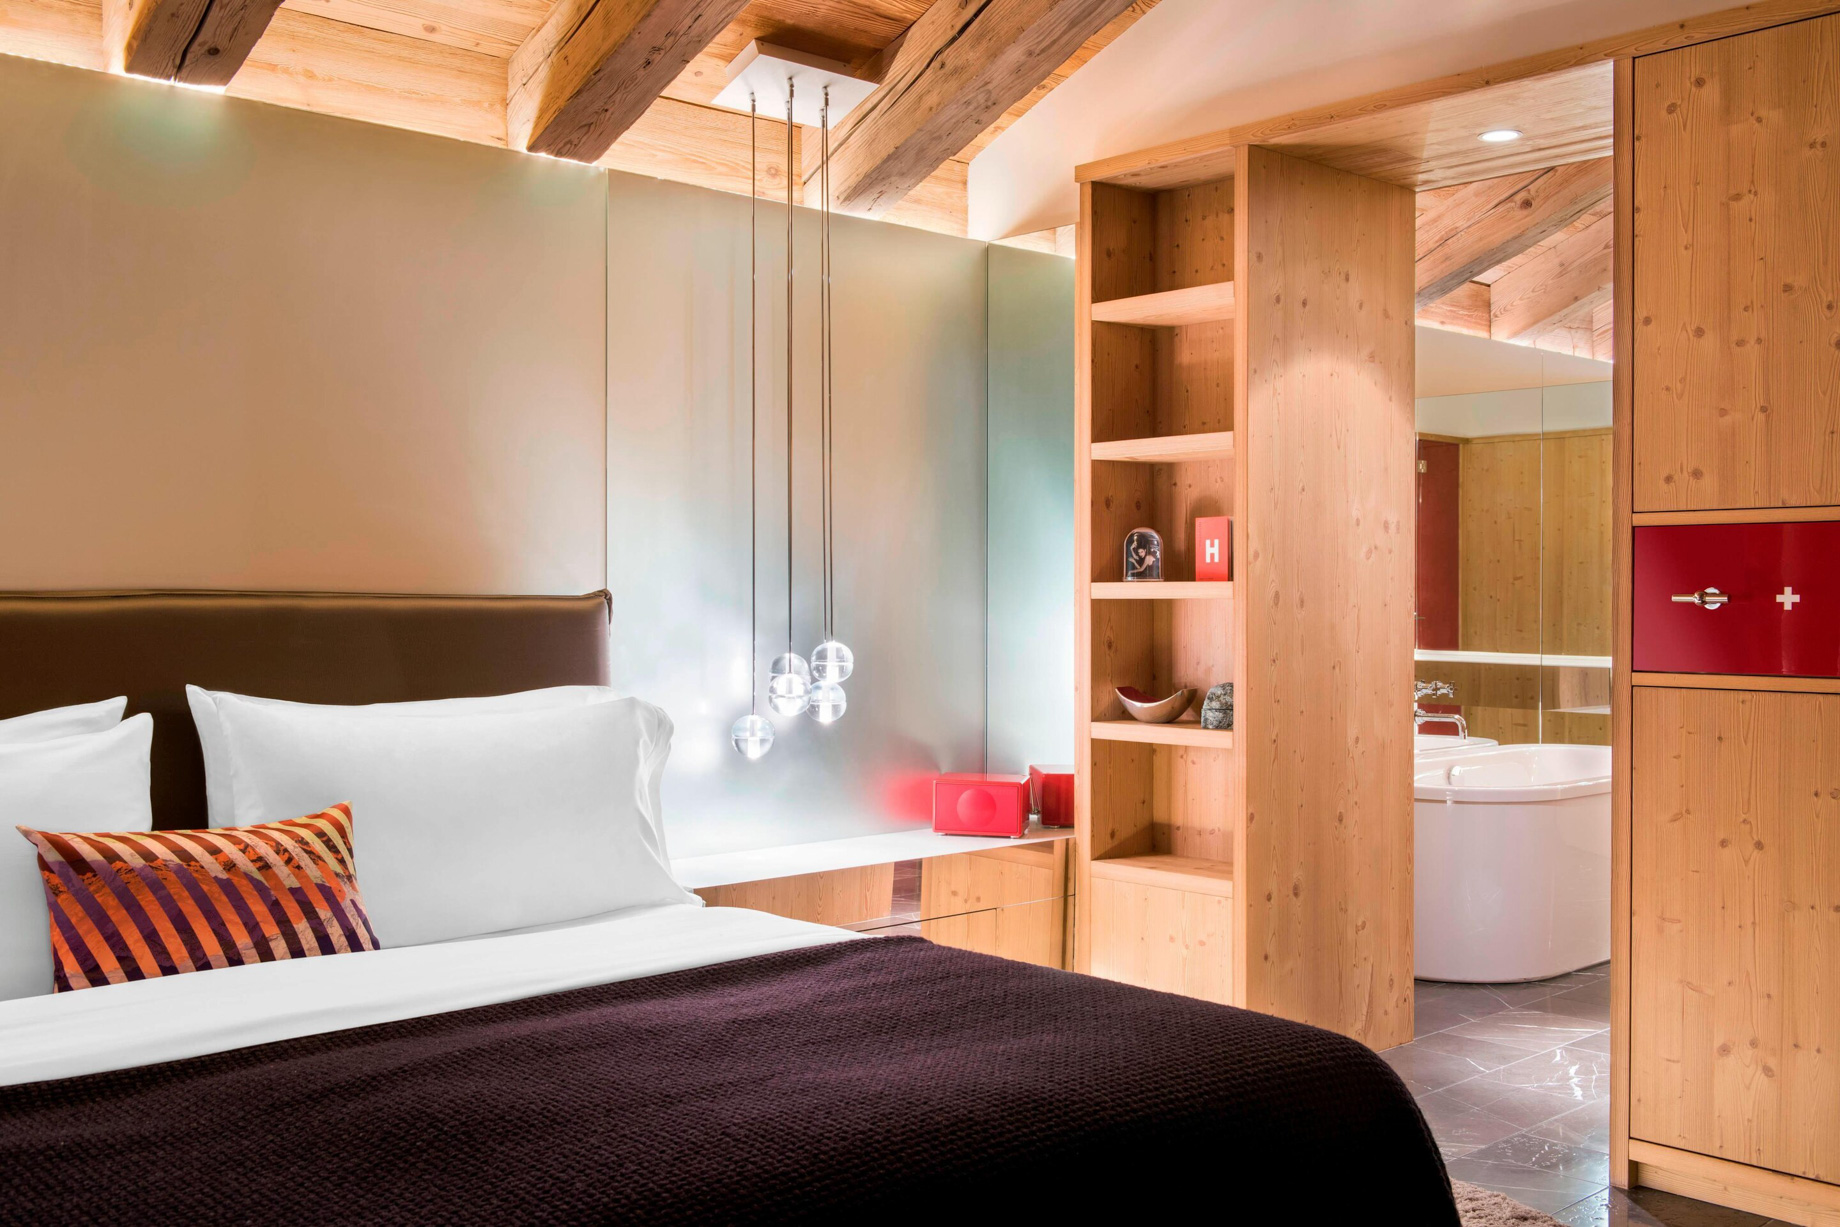 W Verbier Hotel – Verbier, Switzerland – Fabulous Suite Decor